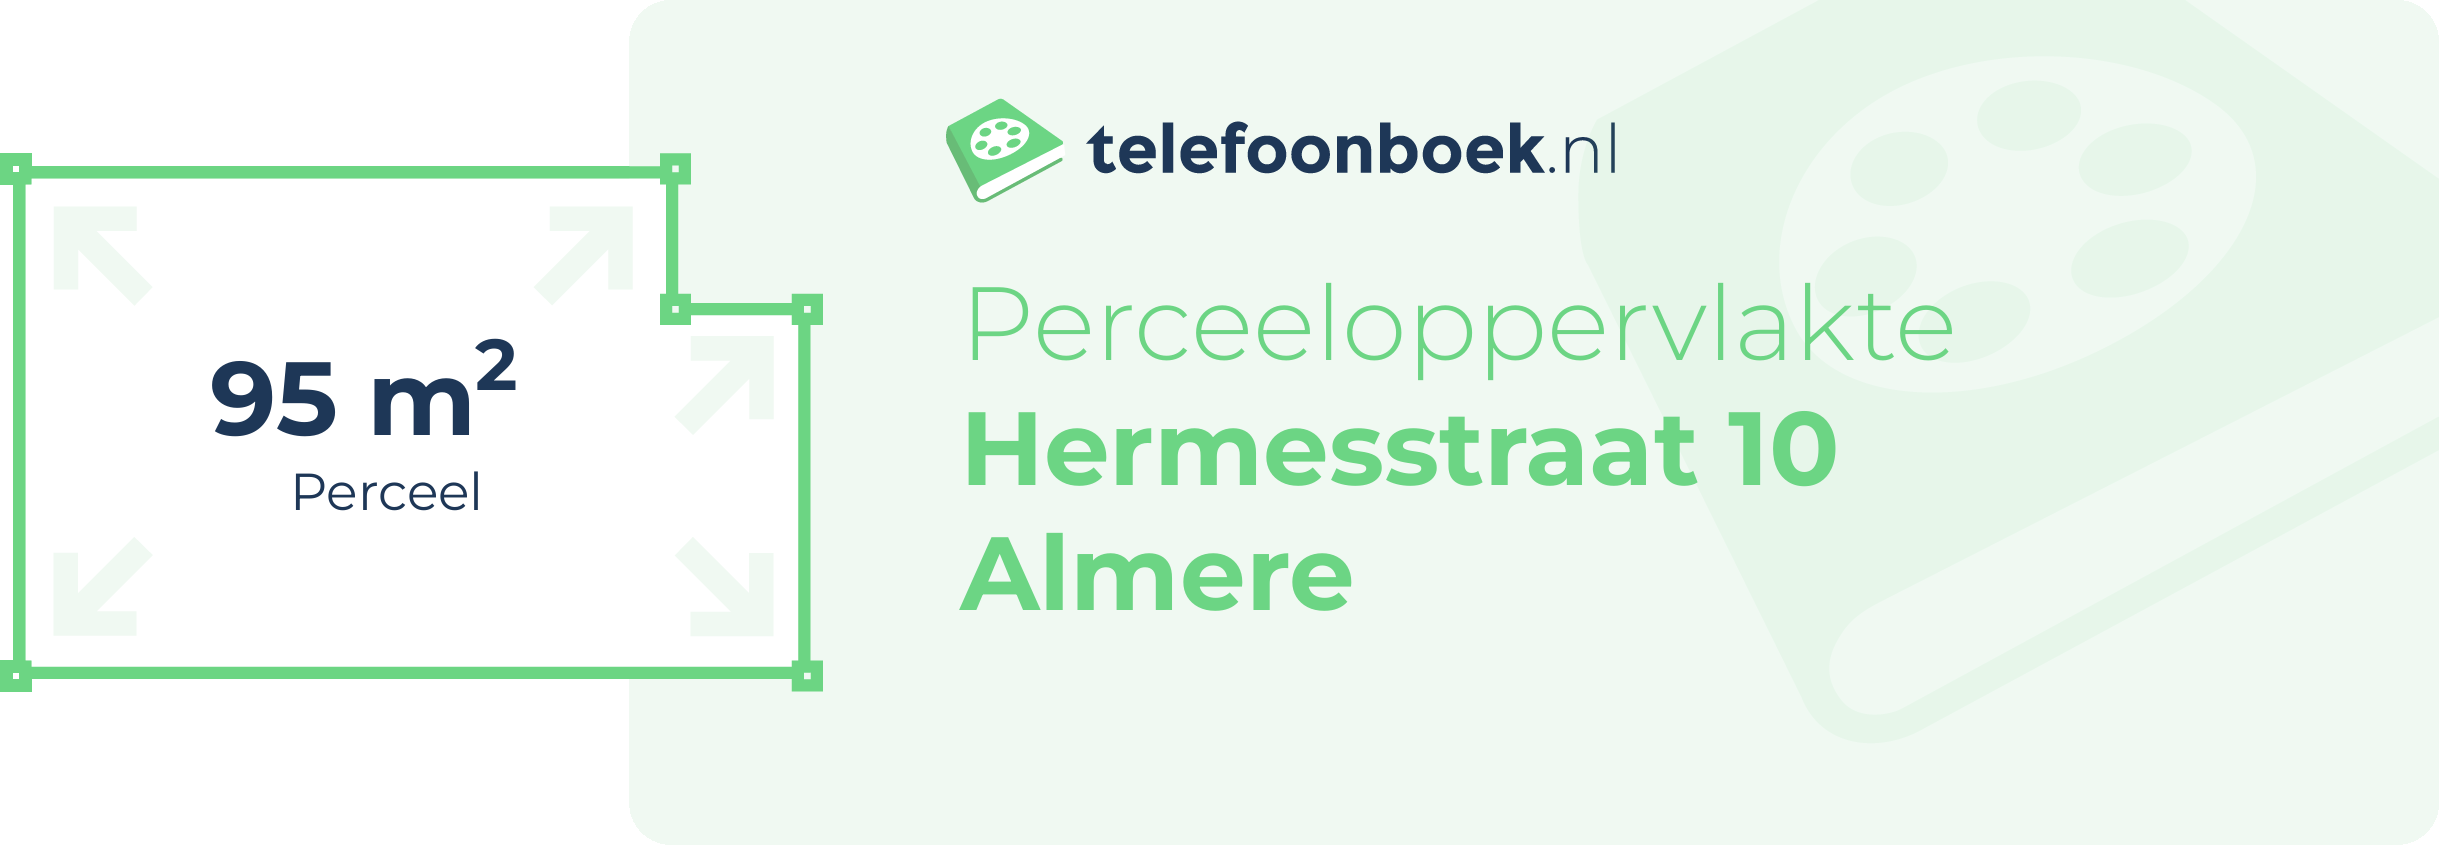 Perceeloppervlakte Hermesstraat 10 Almere